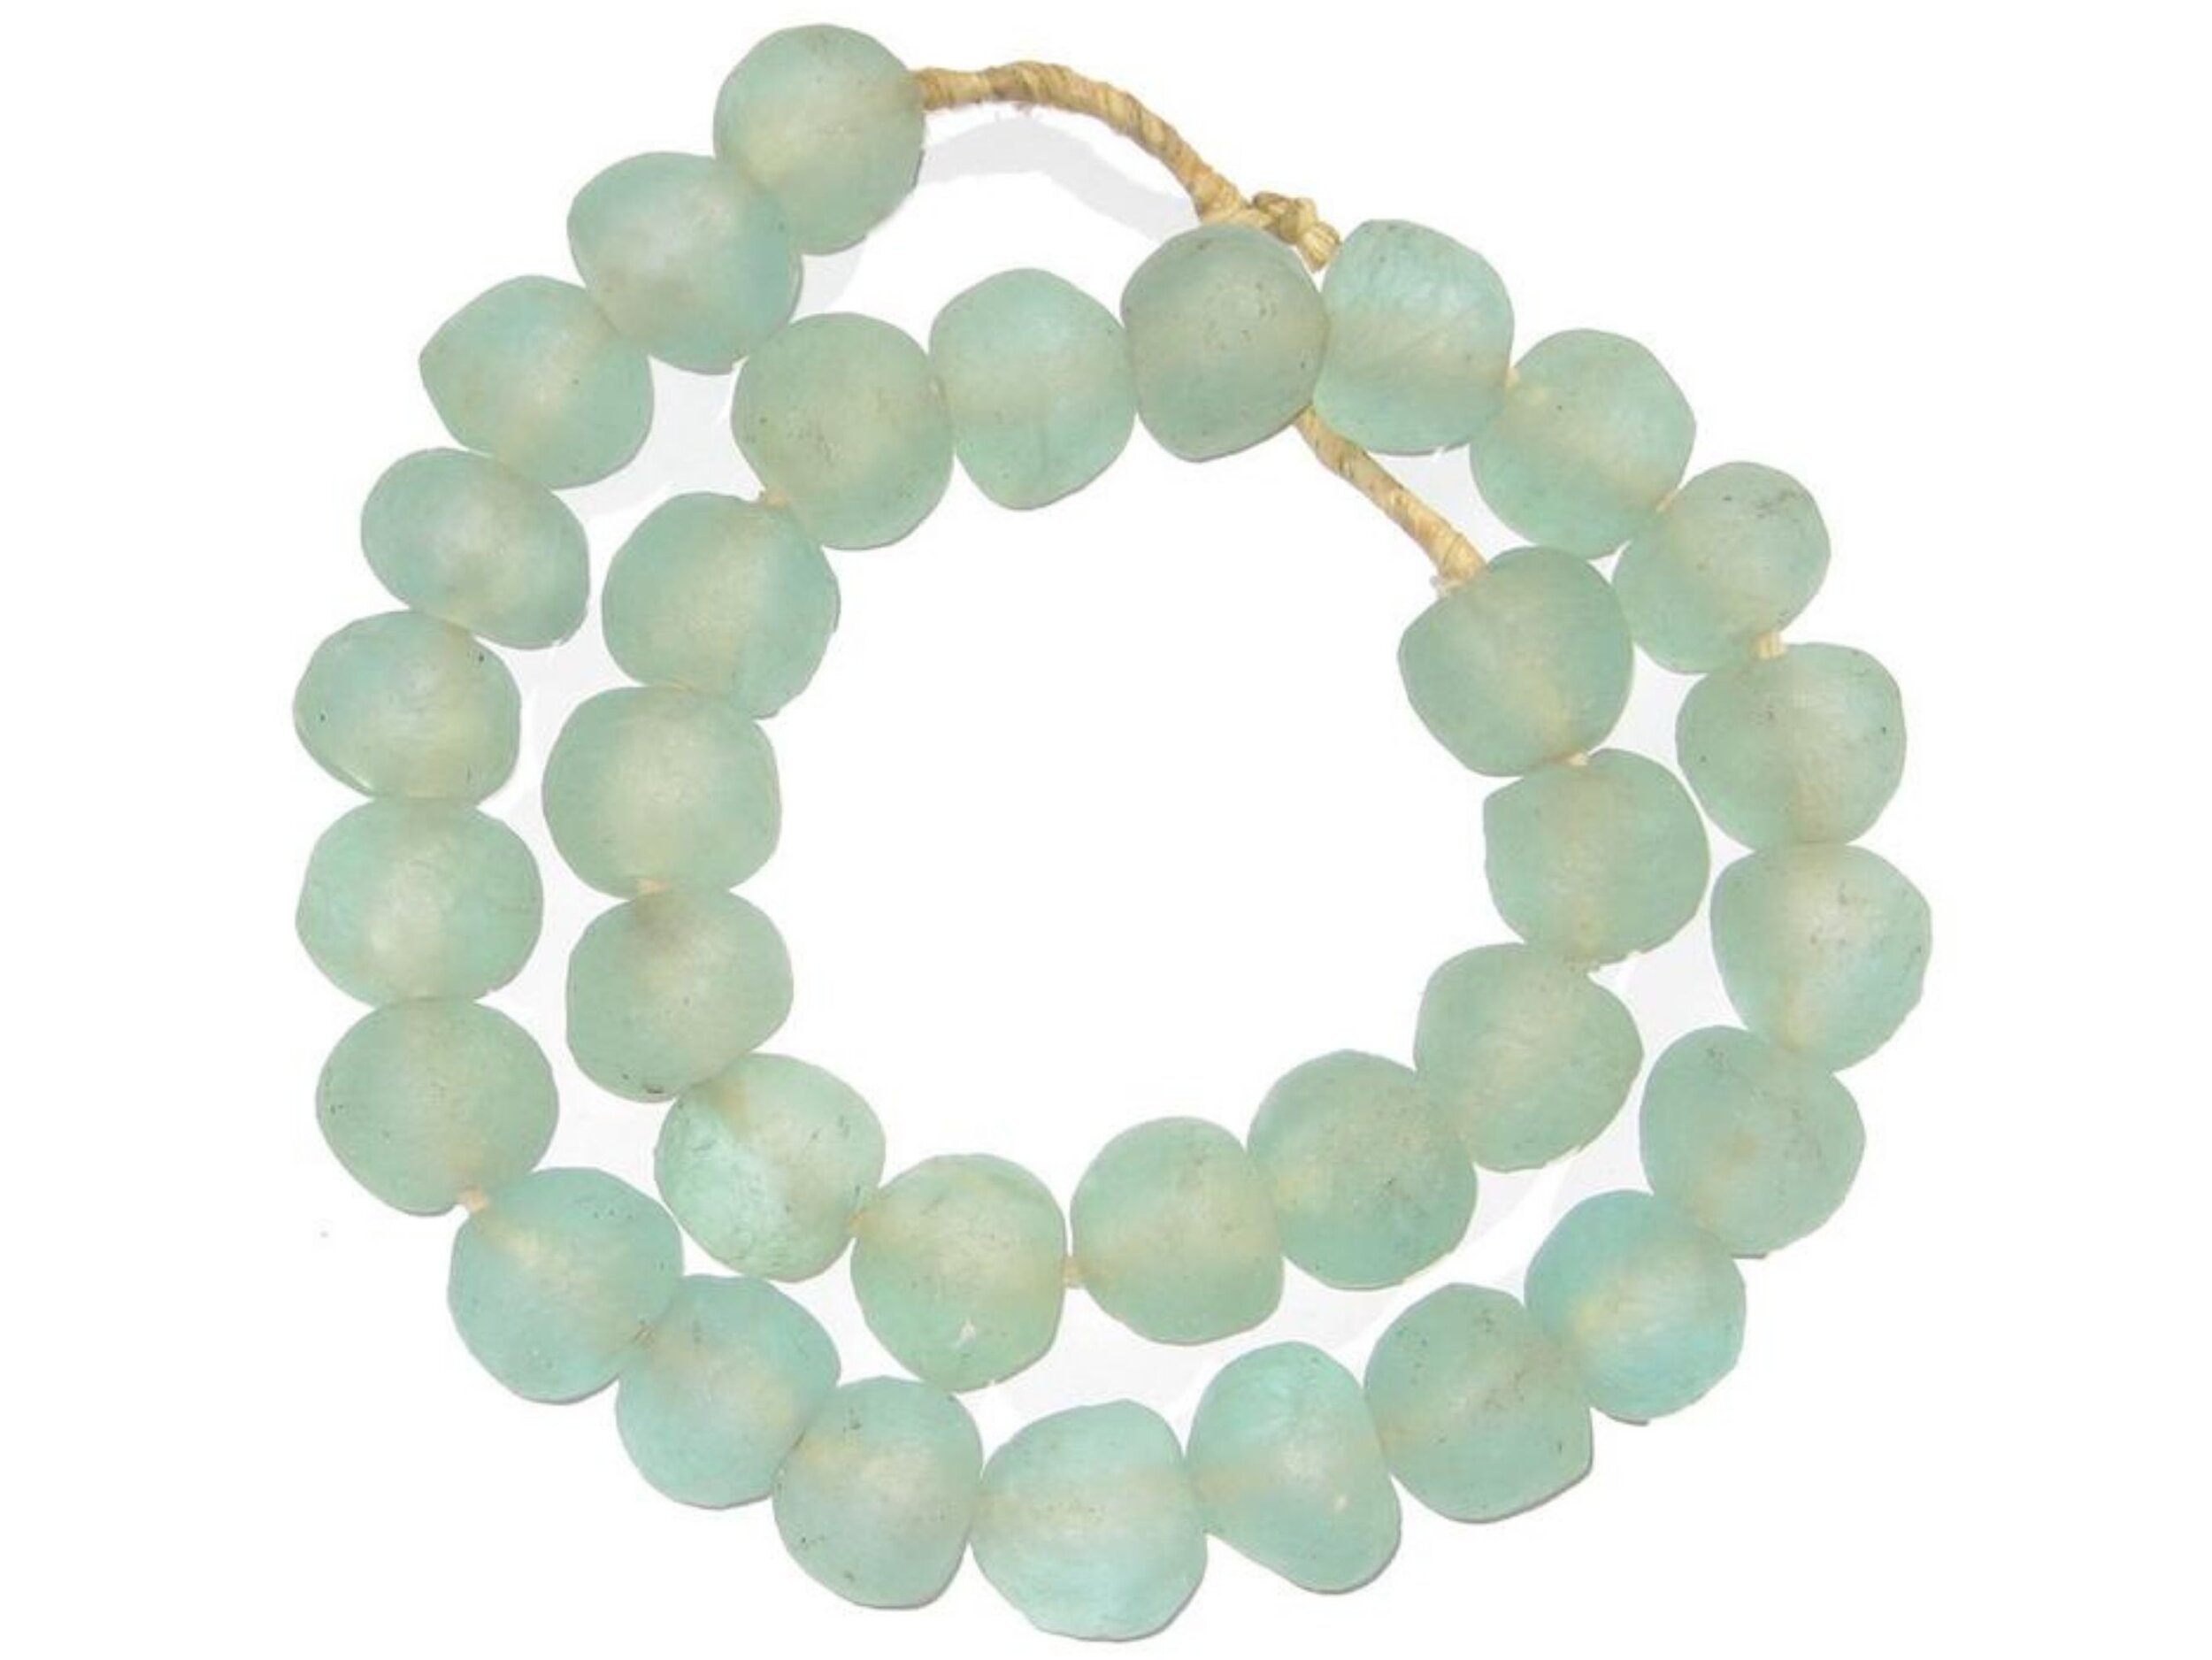 Jumbo Clear Recycled Aqua Glass Beads